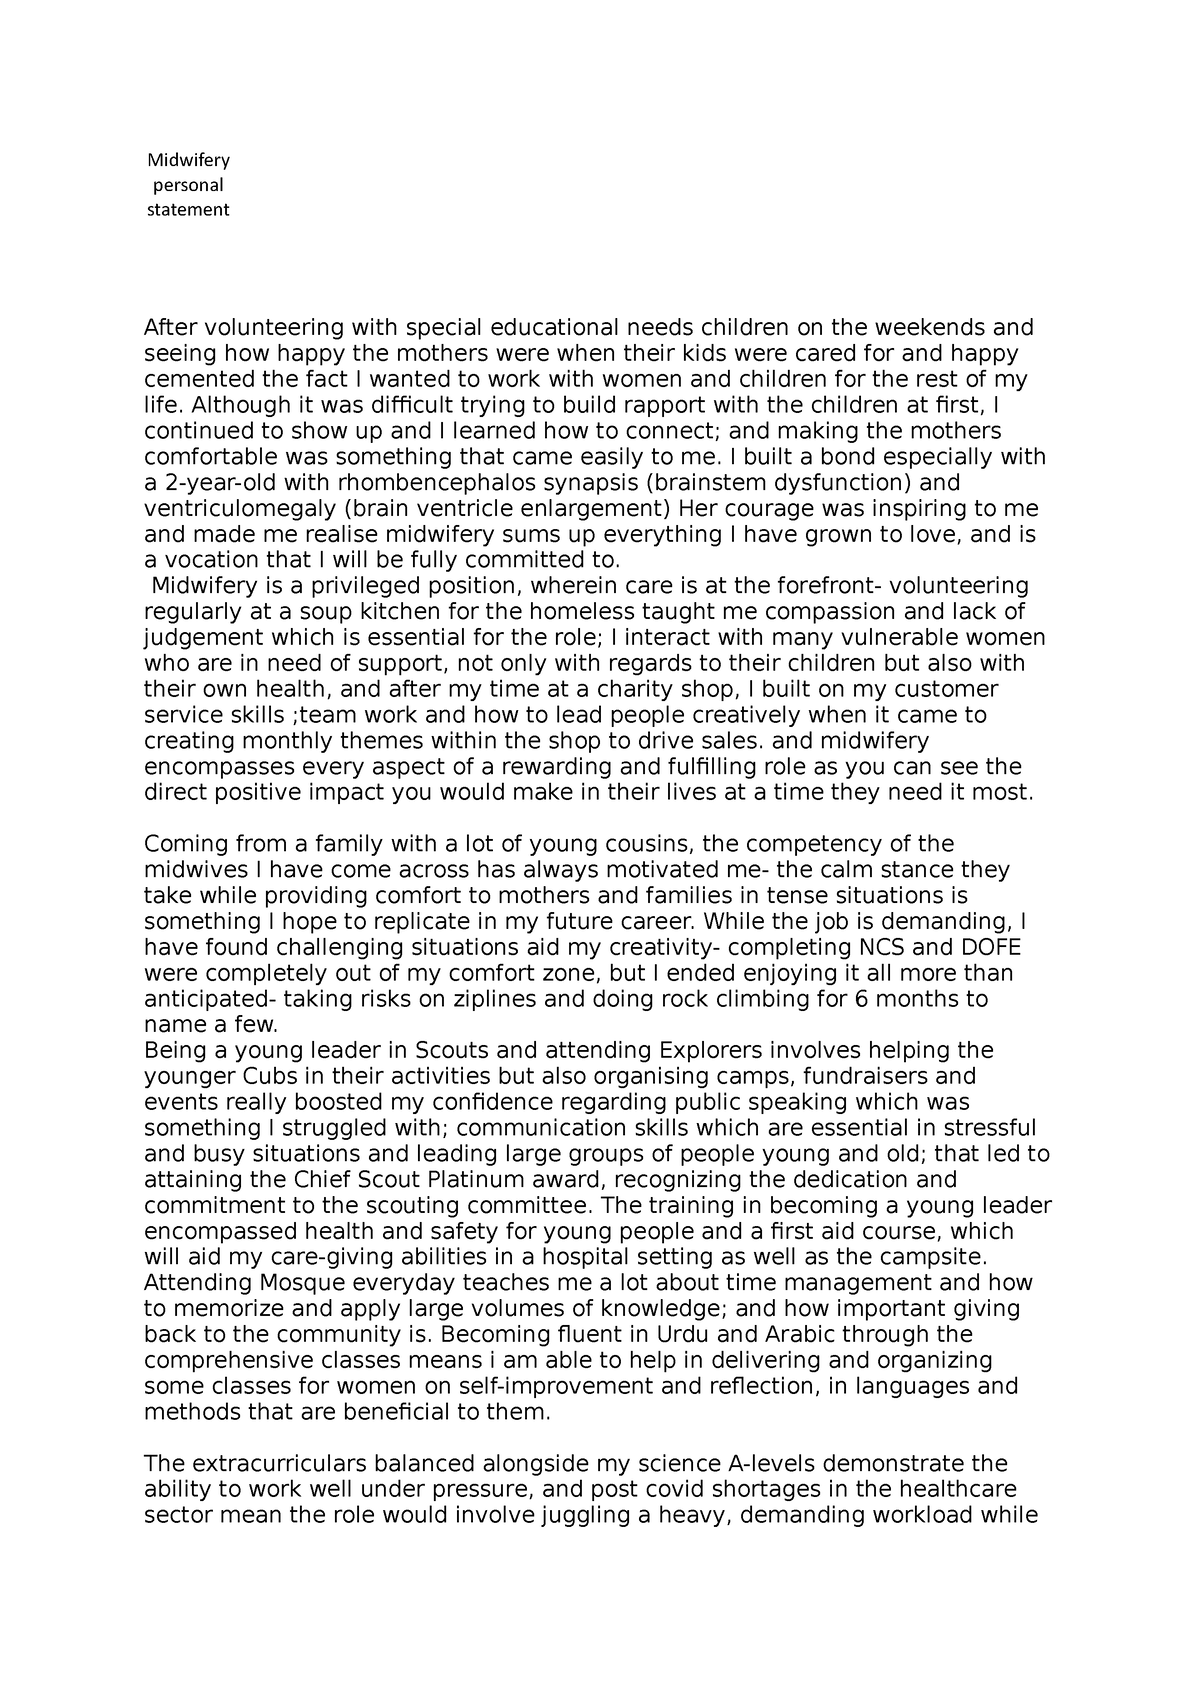 ucas personal statement midwifery